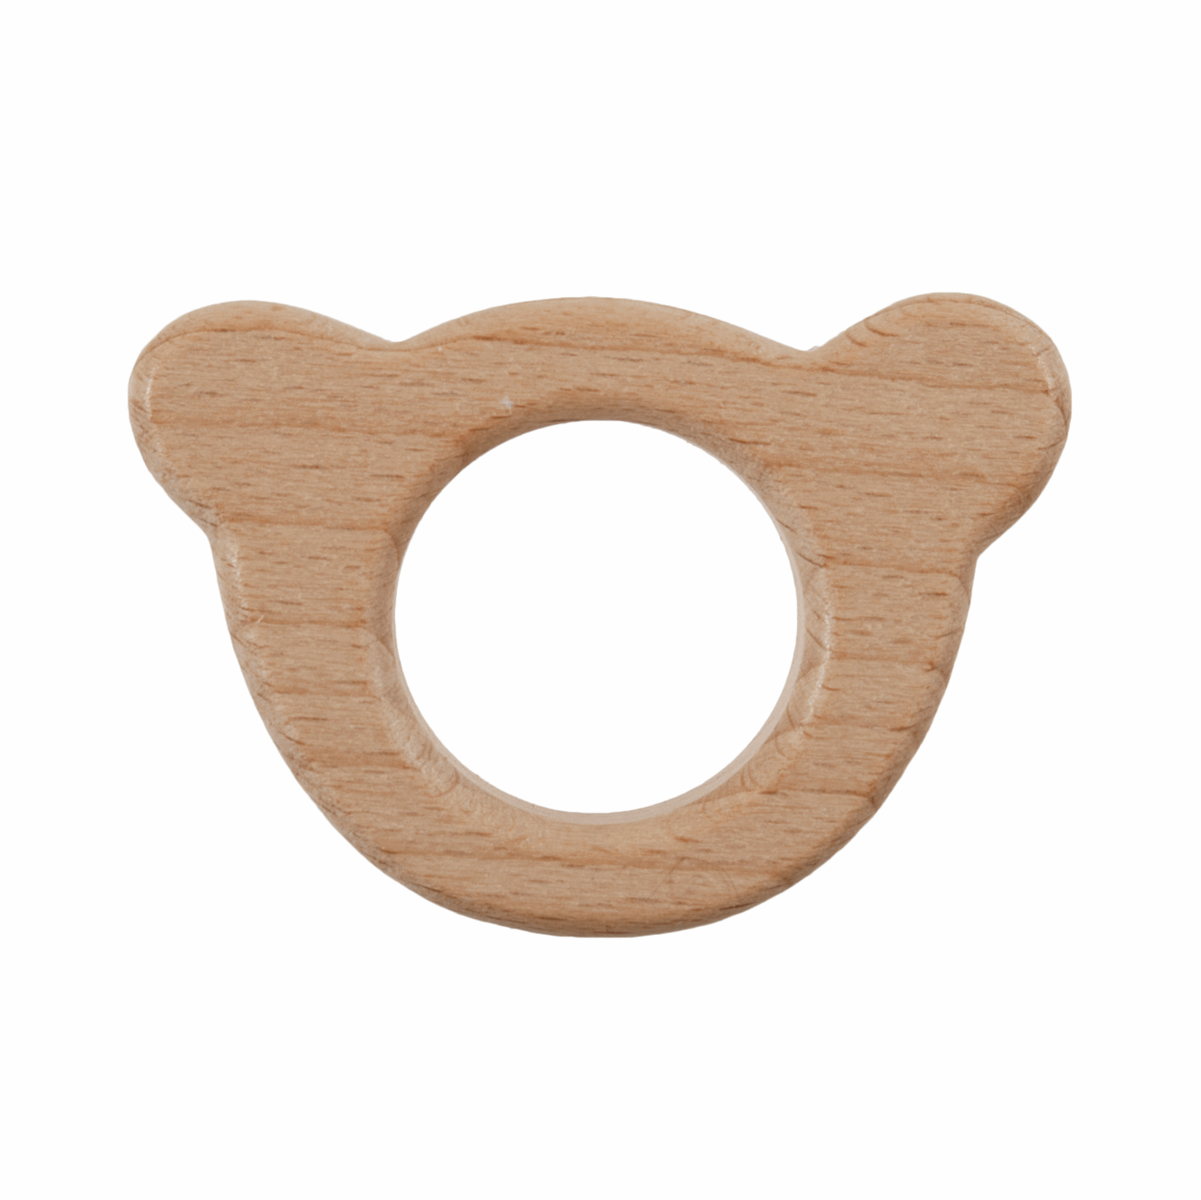 Trimits Macrame Wooden Teddy Craft Ring